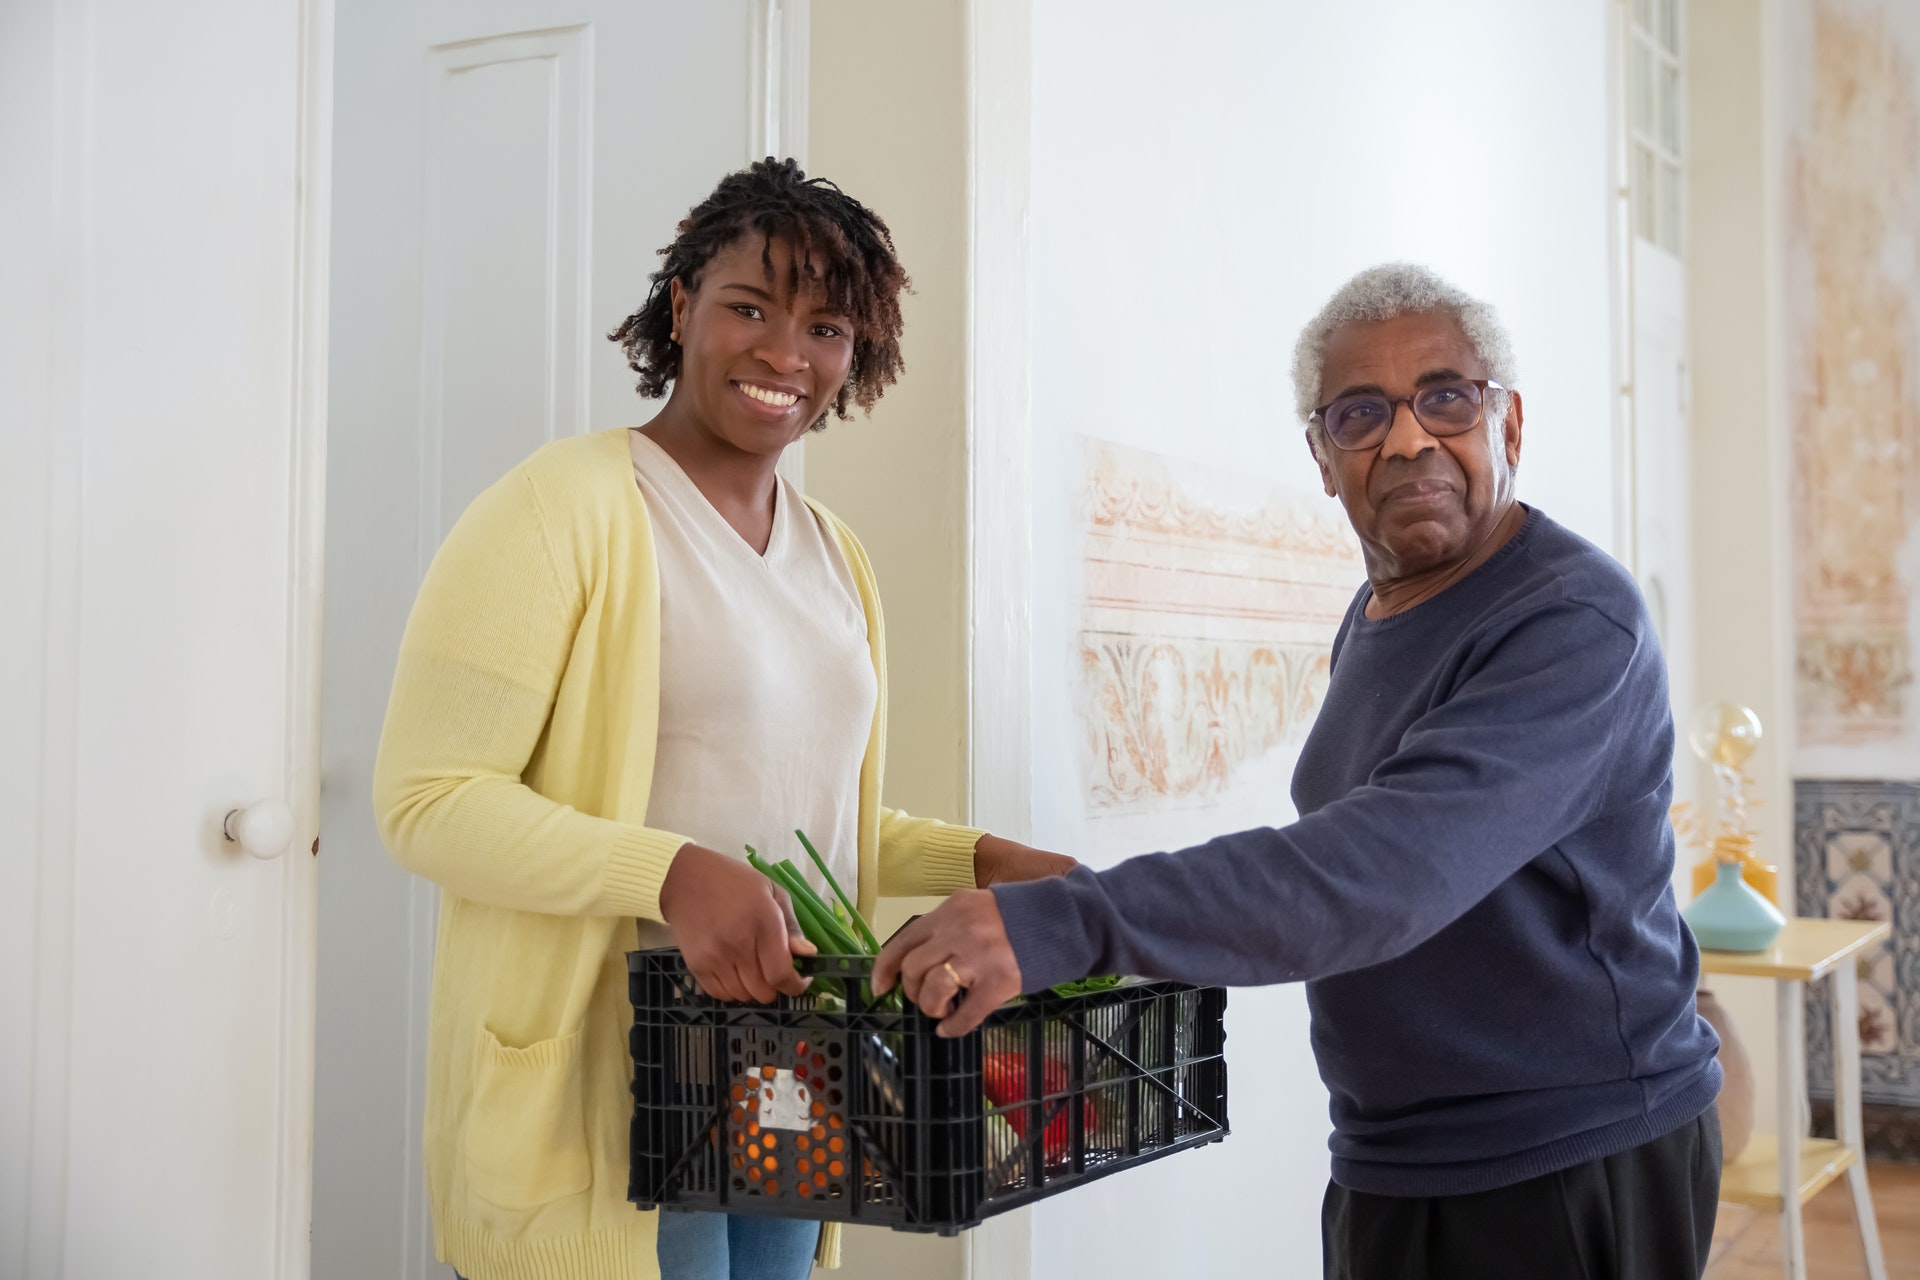 5 Great Ways Homemaker Services Benefit Seniors